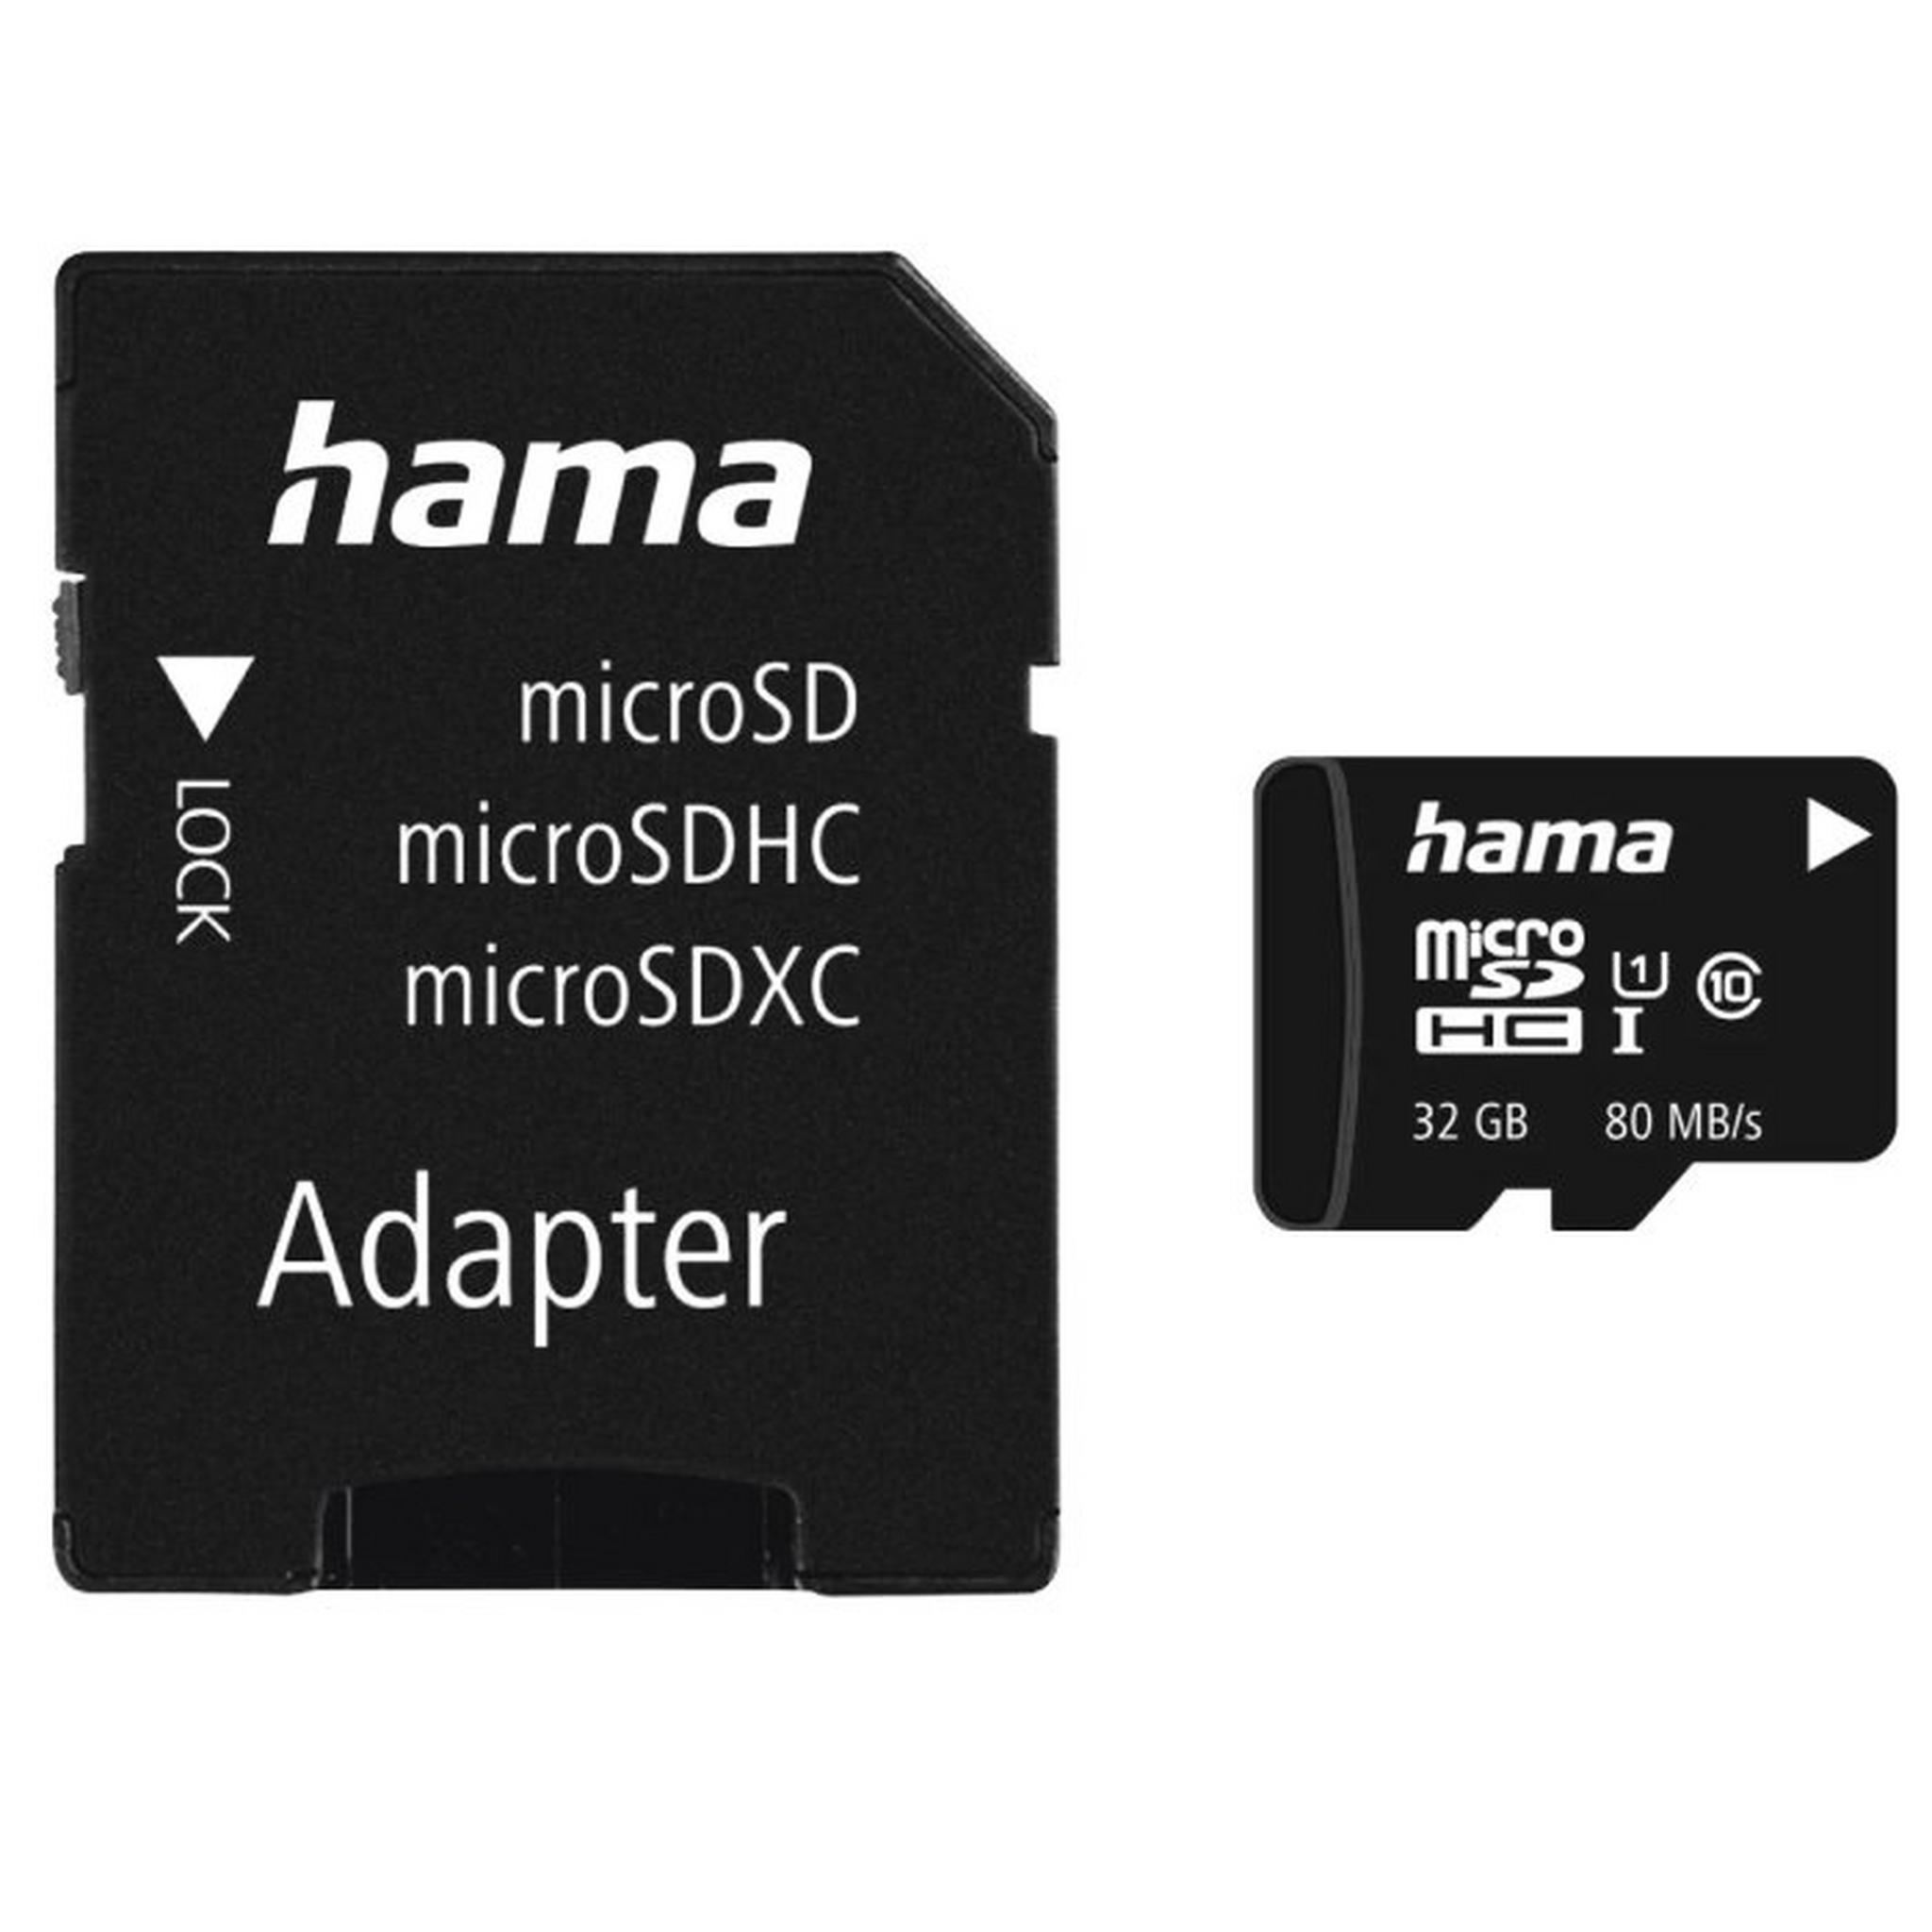 Hama microSDHC 32GB Class 10 UHS-I 80MB/s, 32GB